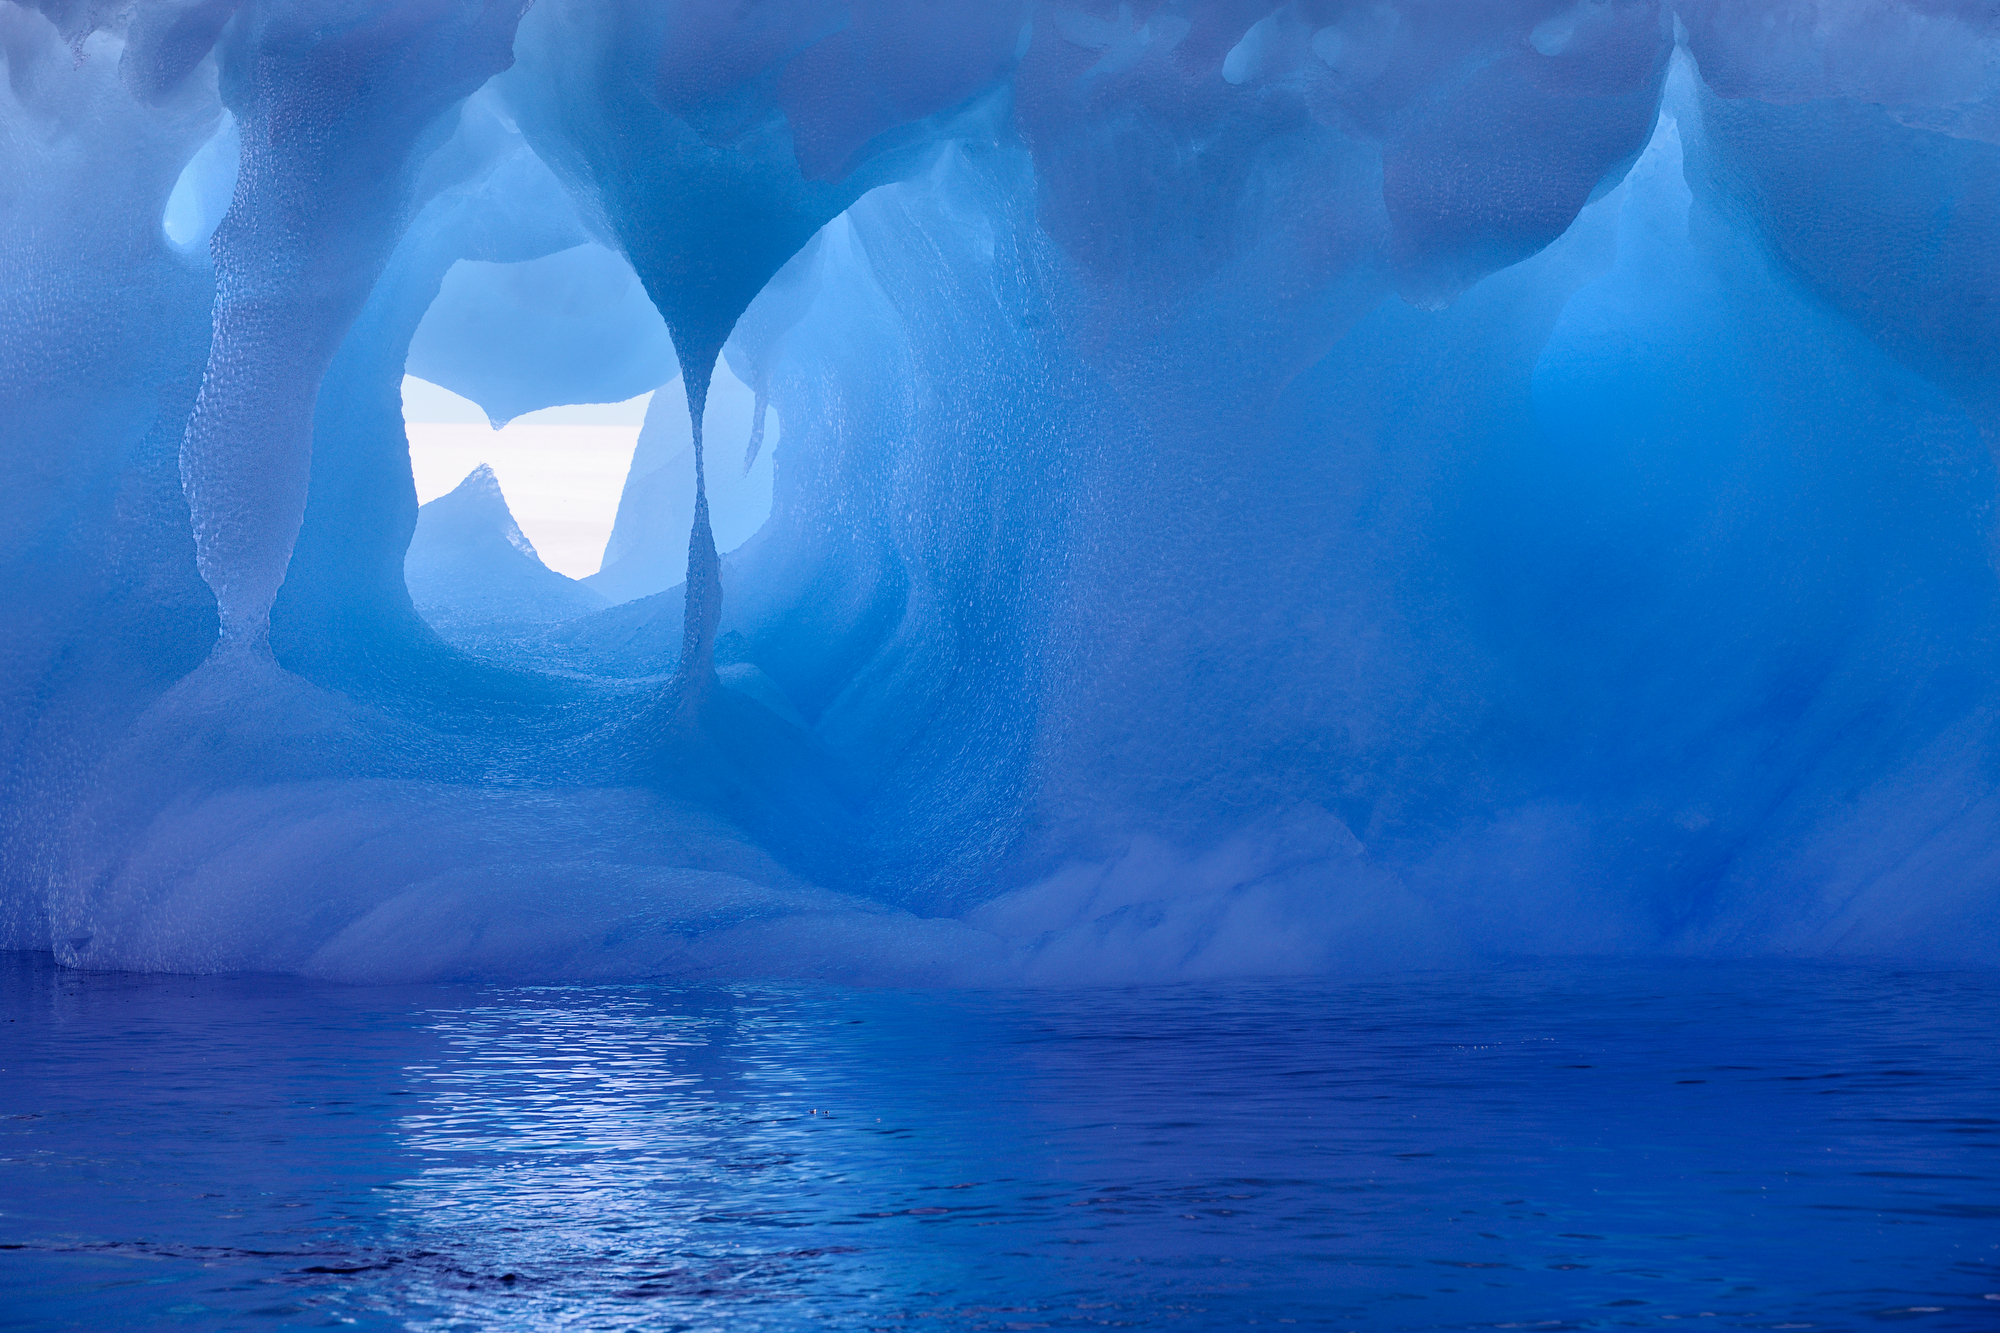 Свет в океане текст. Подледное озеро в Антарктиде. Озеро подо льдом в Антарктиде. Айсберги Антарктиды. Антарктика фон.